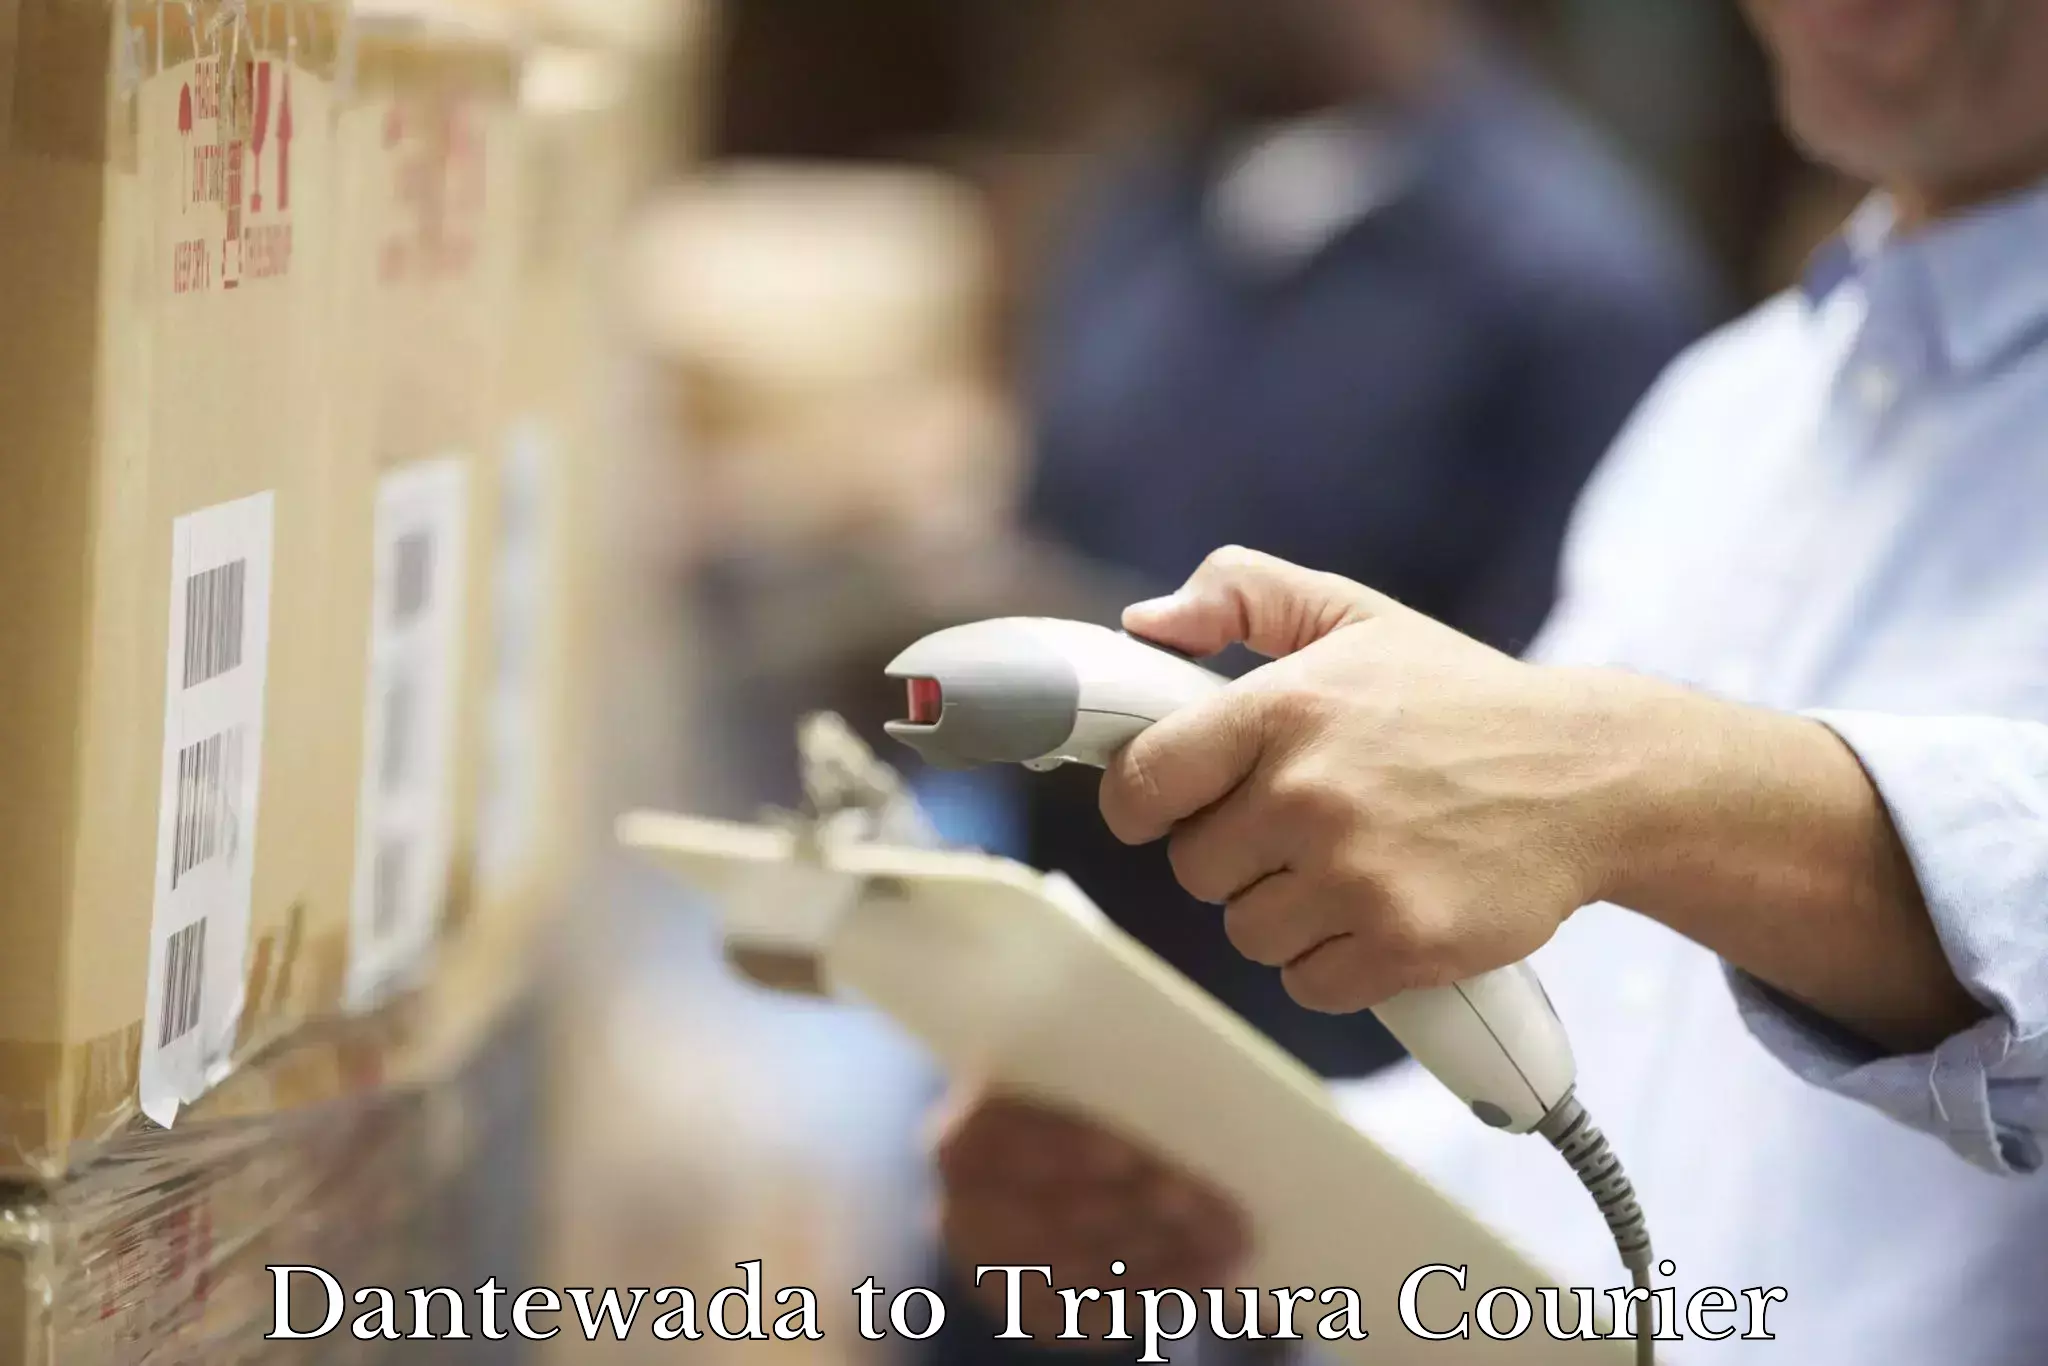 Courier app Dantewada to Udaipur Tripura